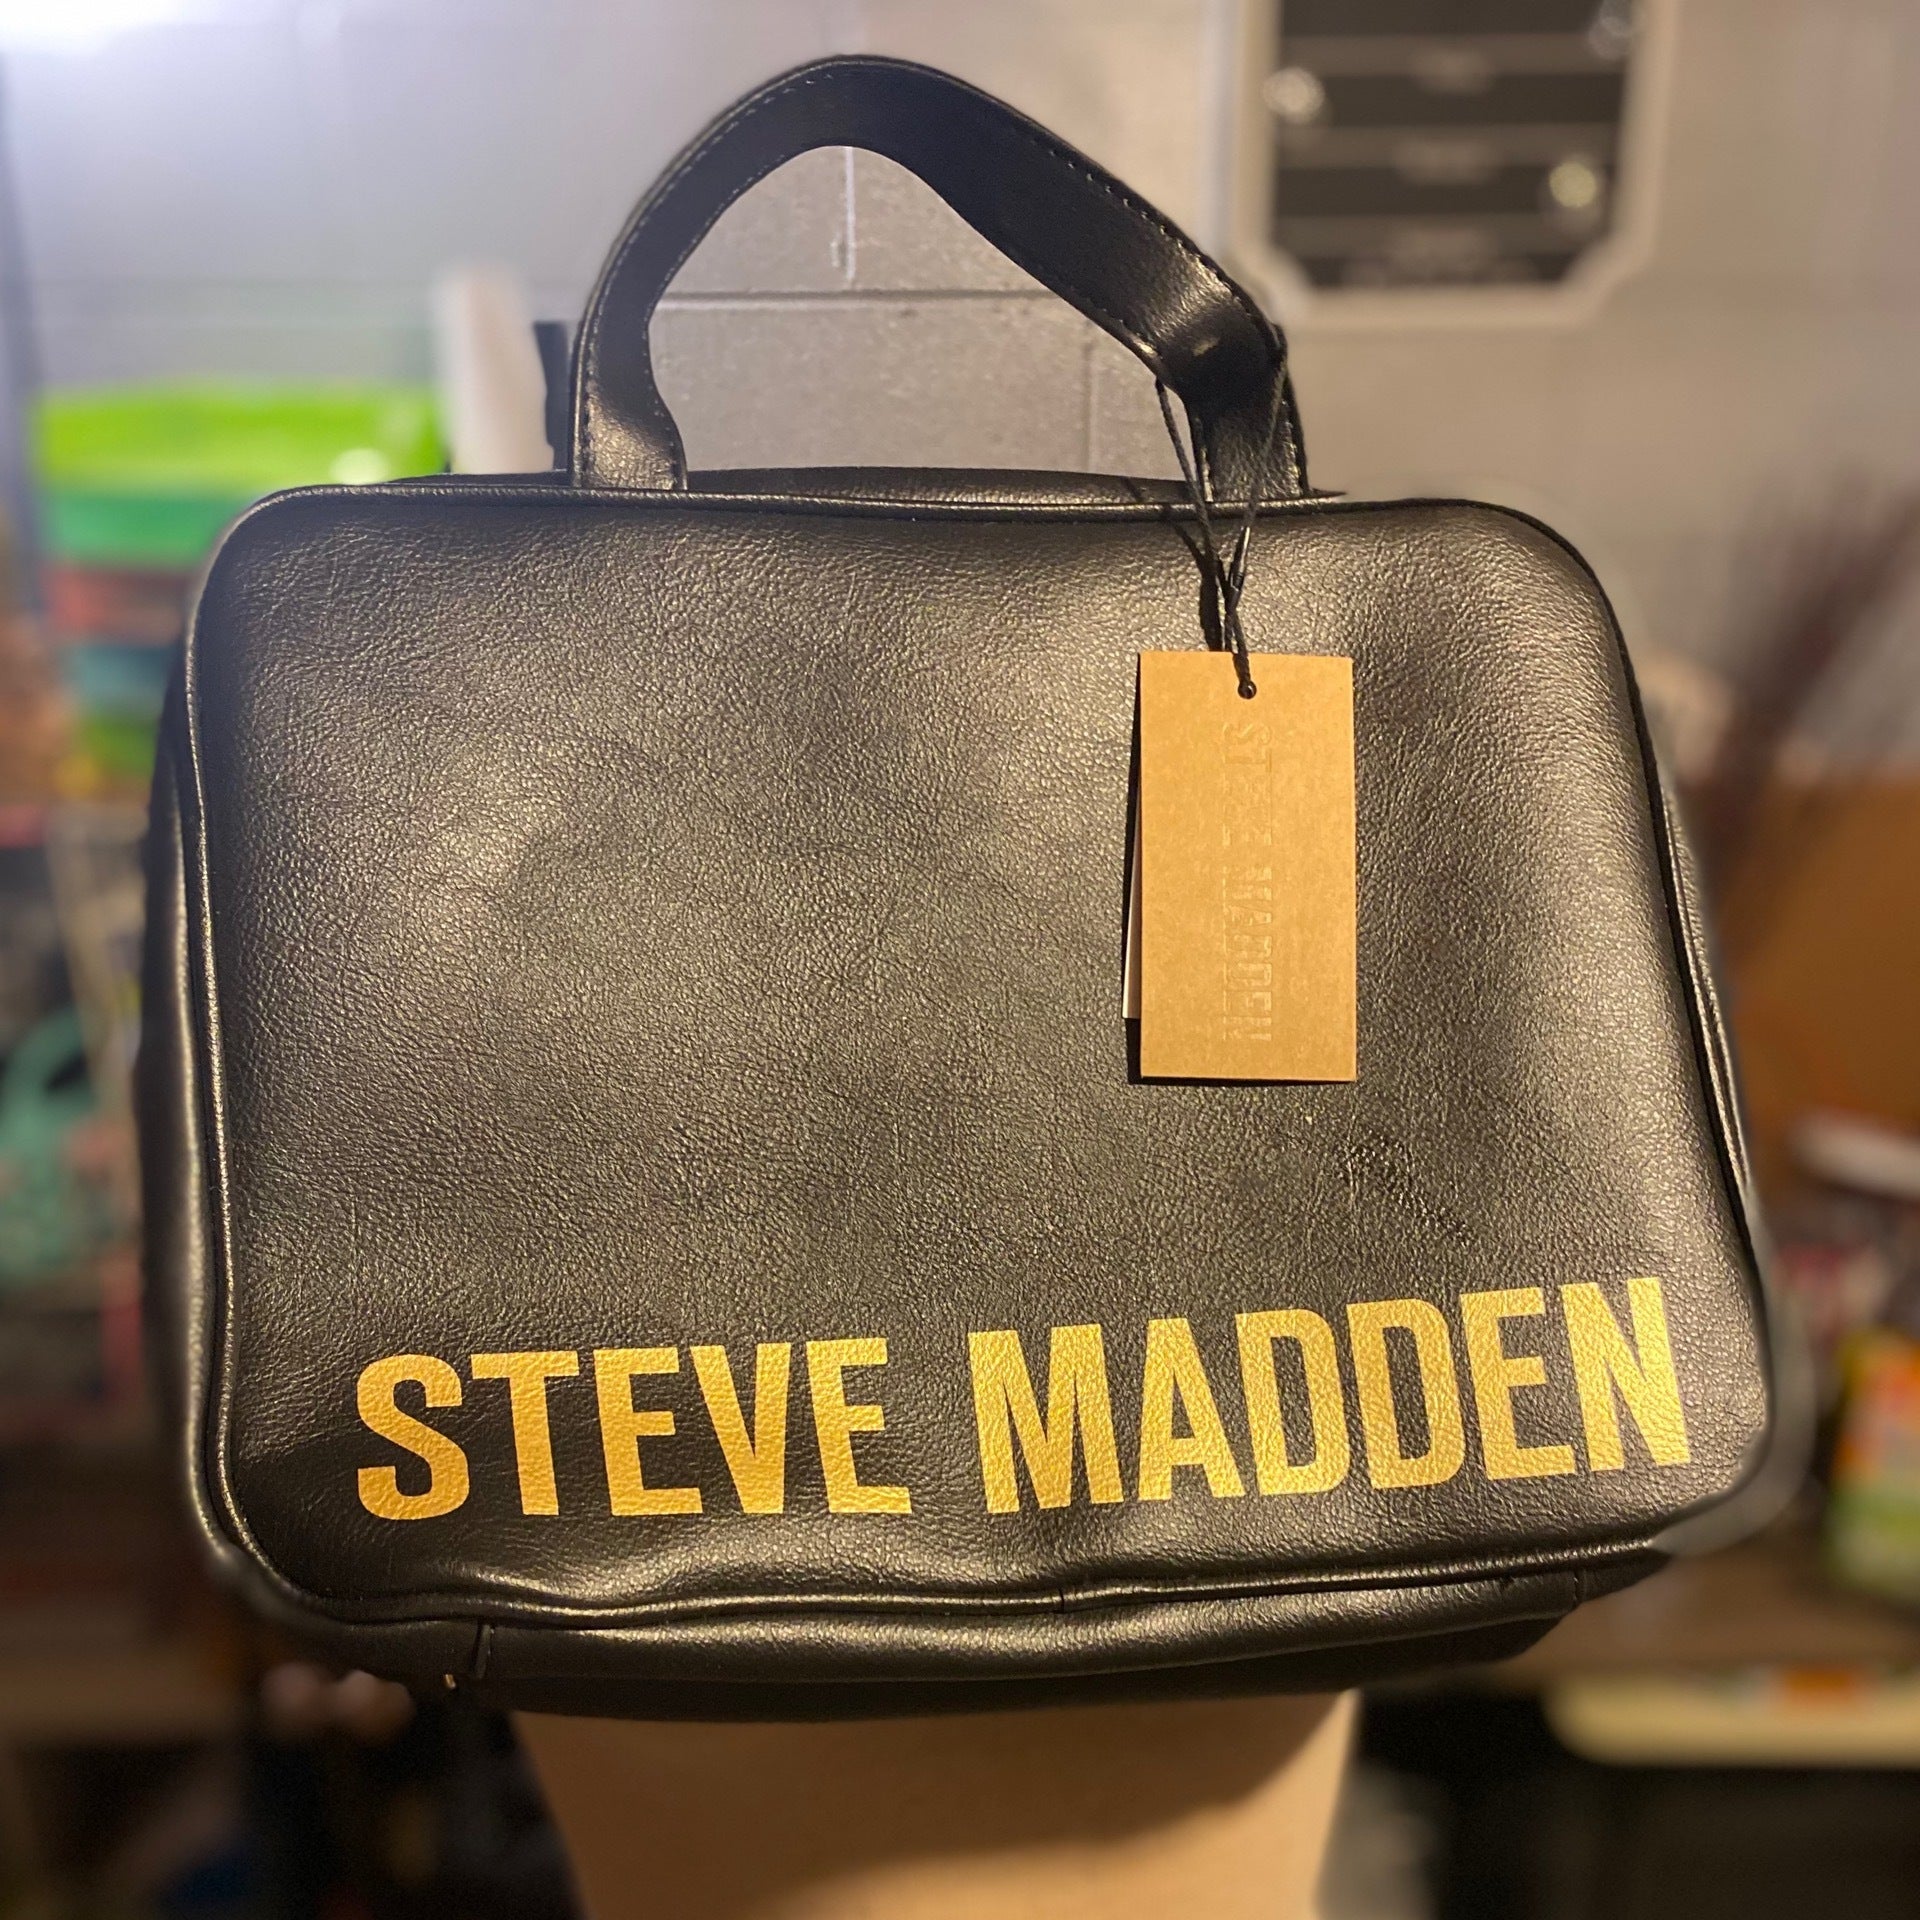 Steve Madden weekender bag